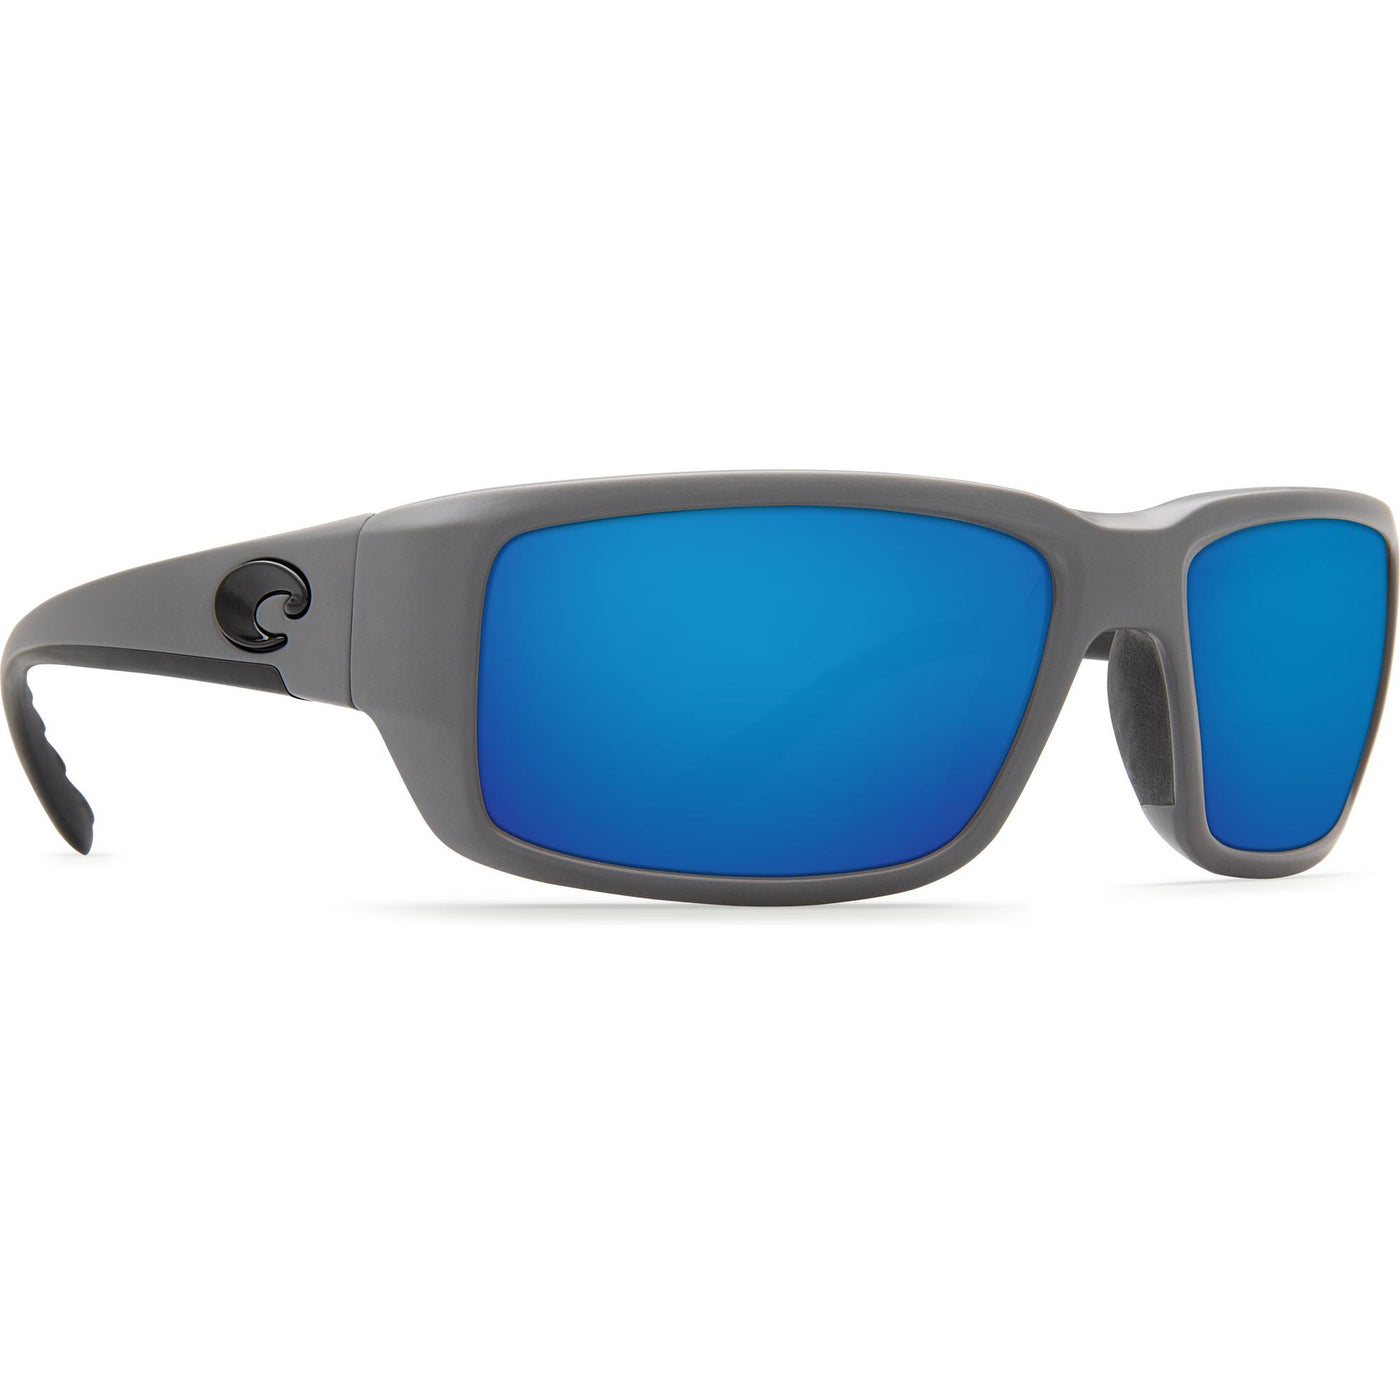 Costa "Fantail" Polarized Sunglasses-SUNGLASSES-MATTE GRAY (98)-BLUE 580G-Kevin's Fine Outdoor Gear & Apparel